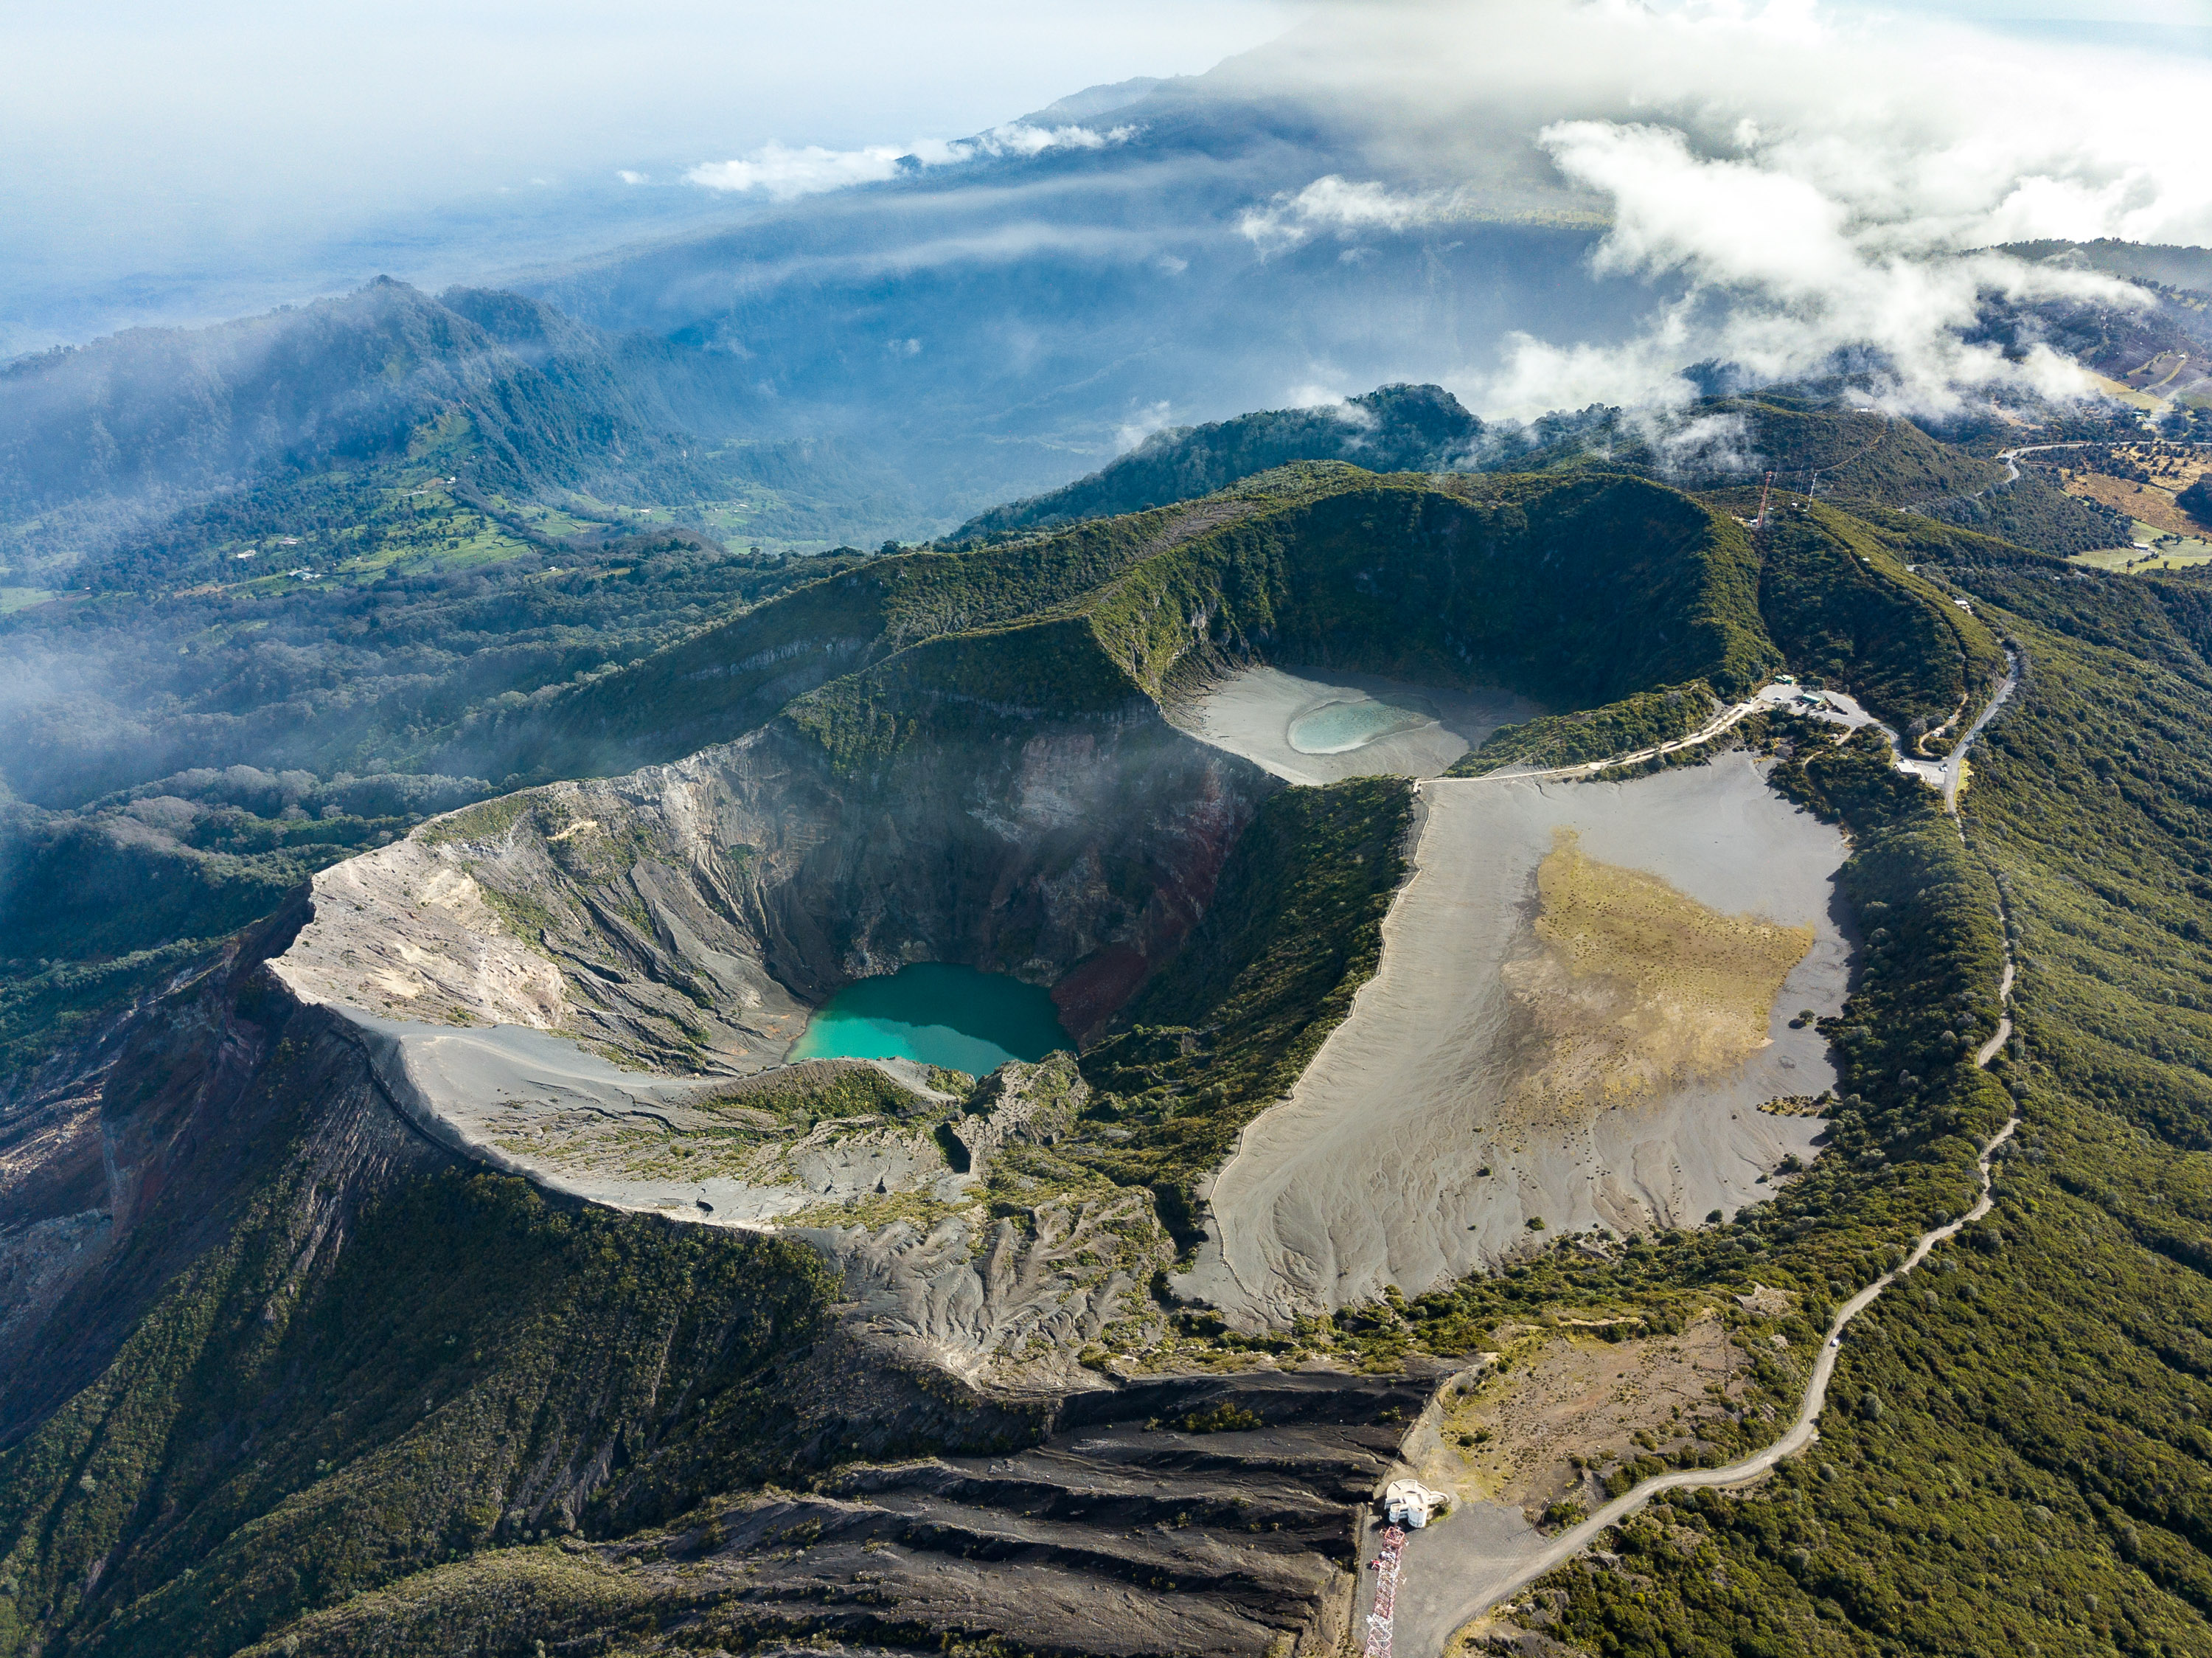 Die Krater vom Vulkan Irazú